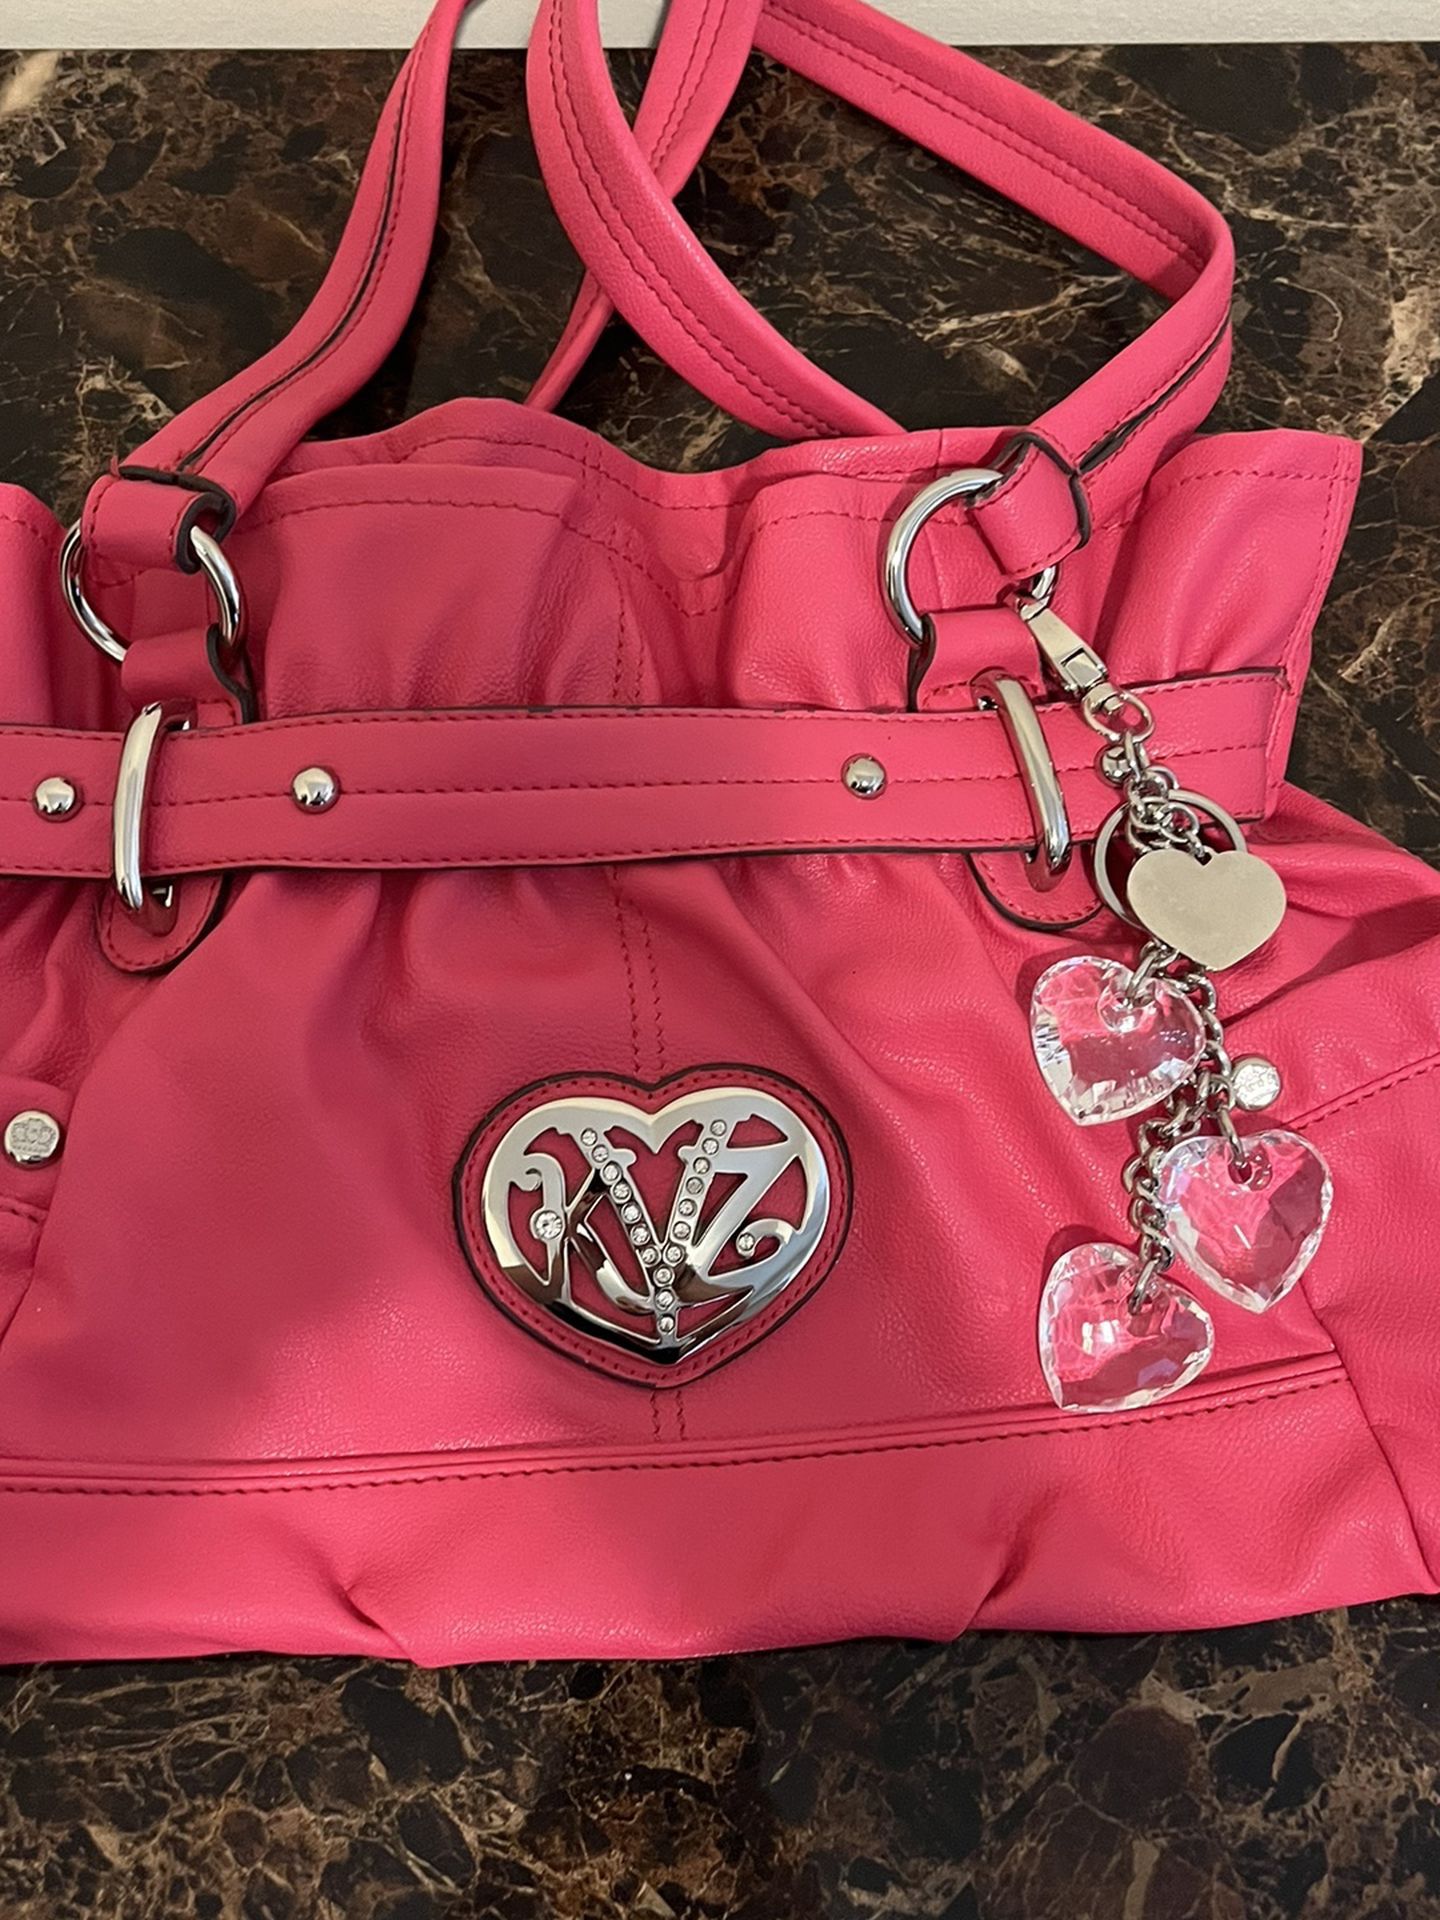 Beautiful Kathy Van Zeeland large pink shoulder bag